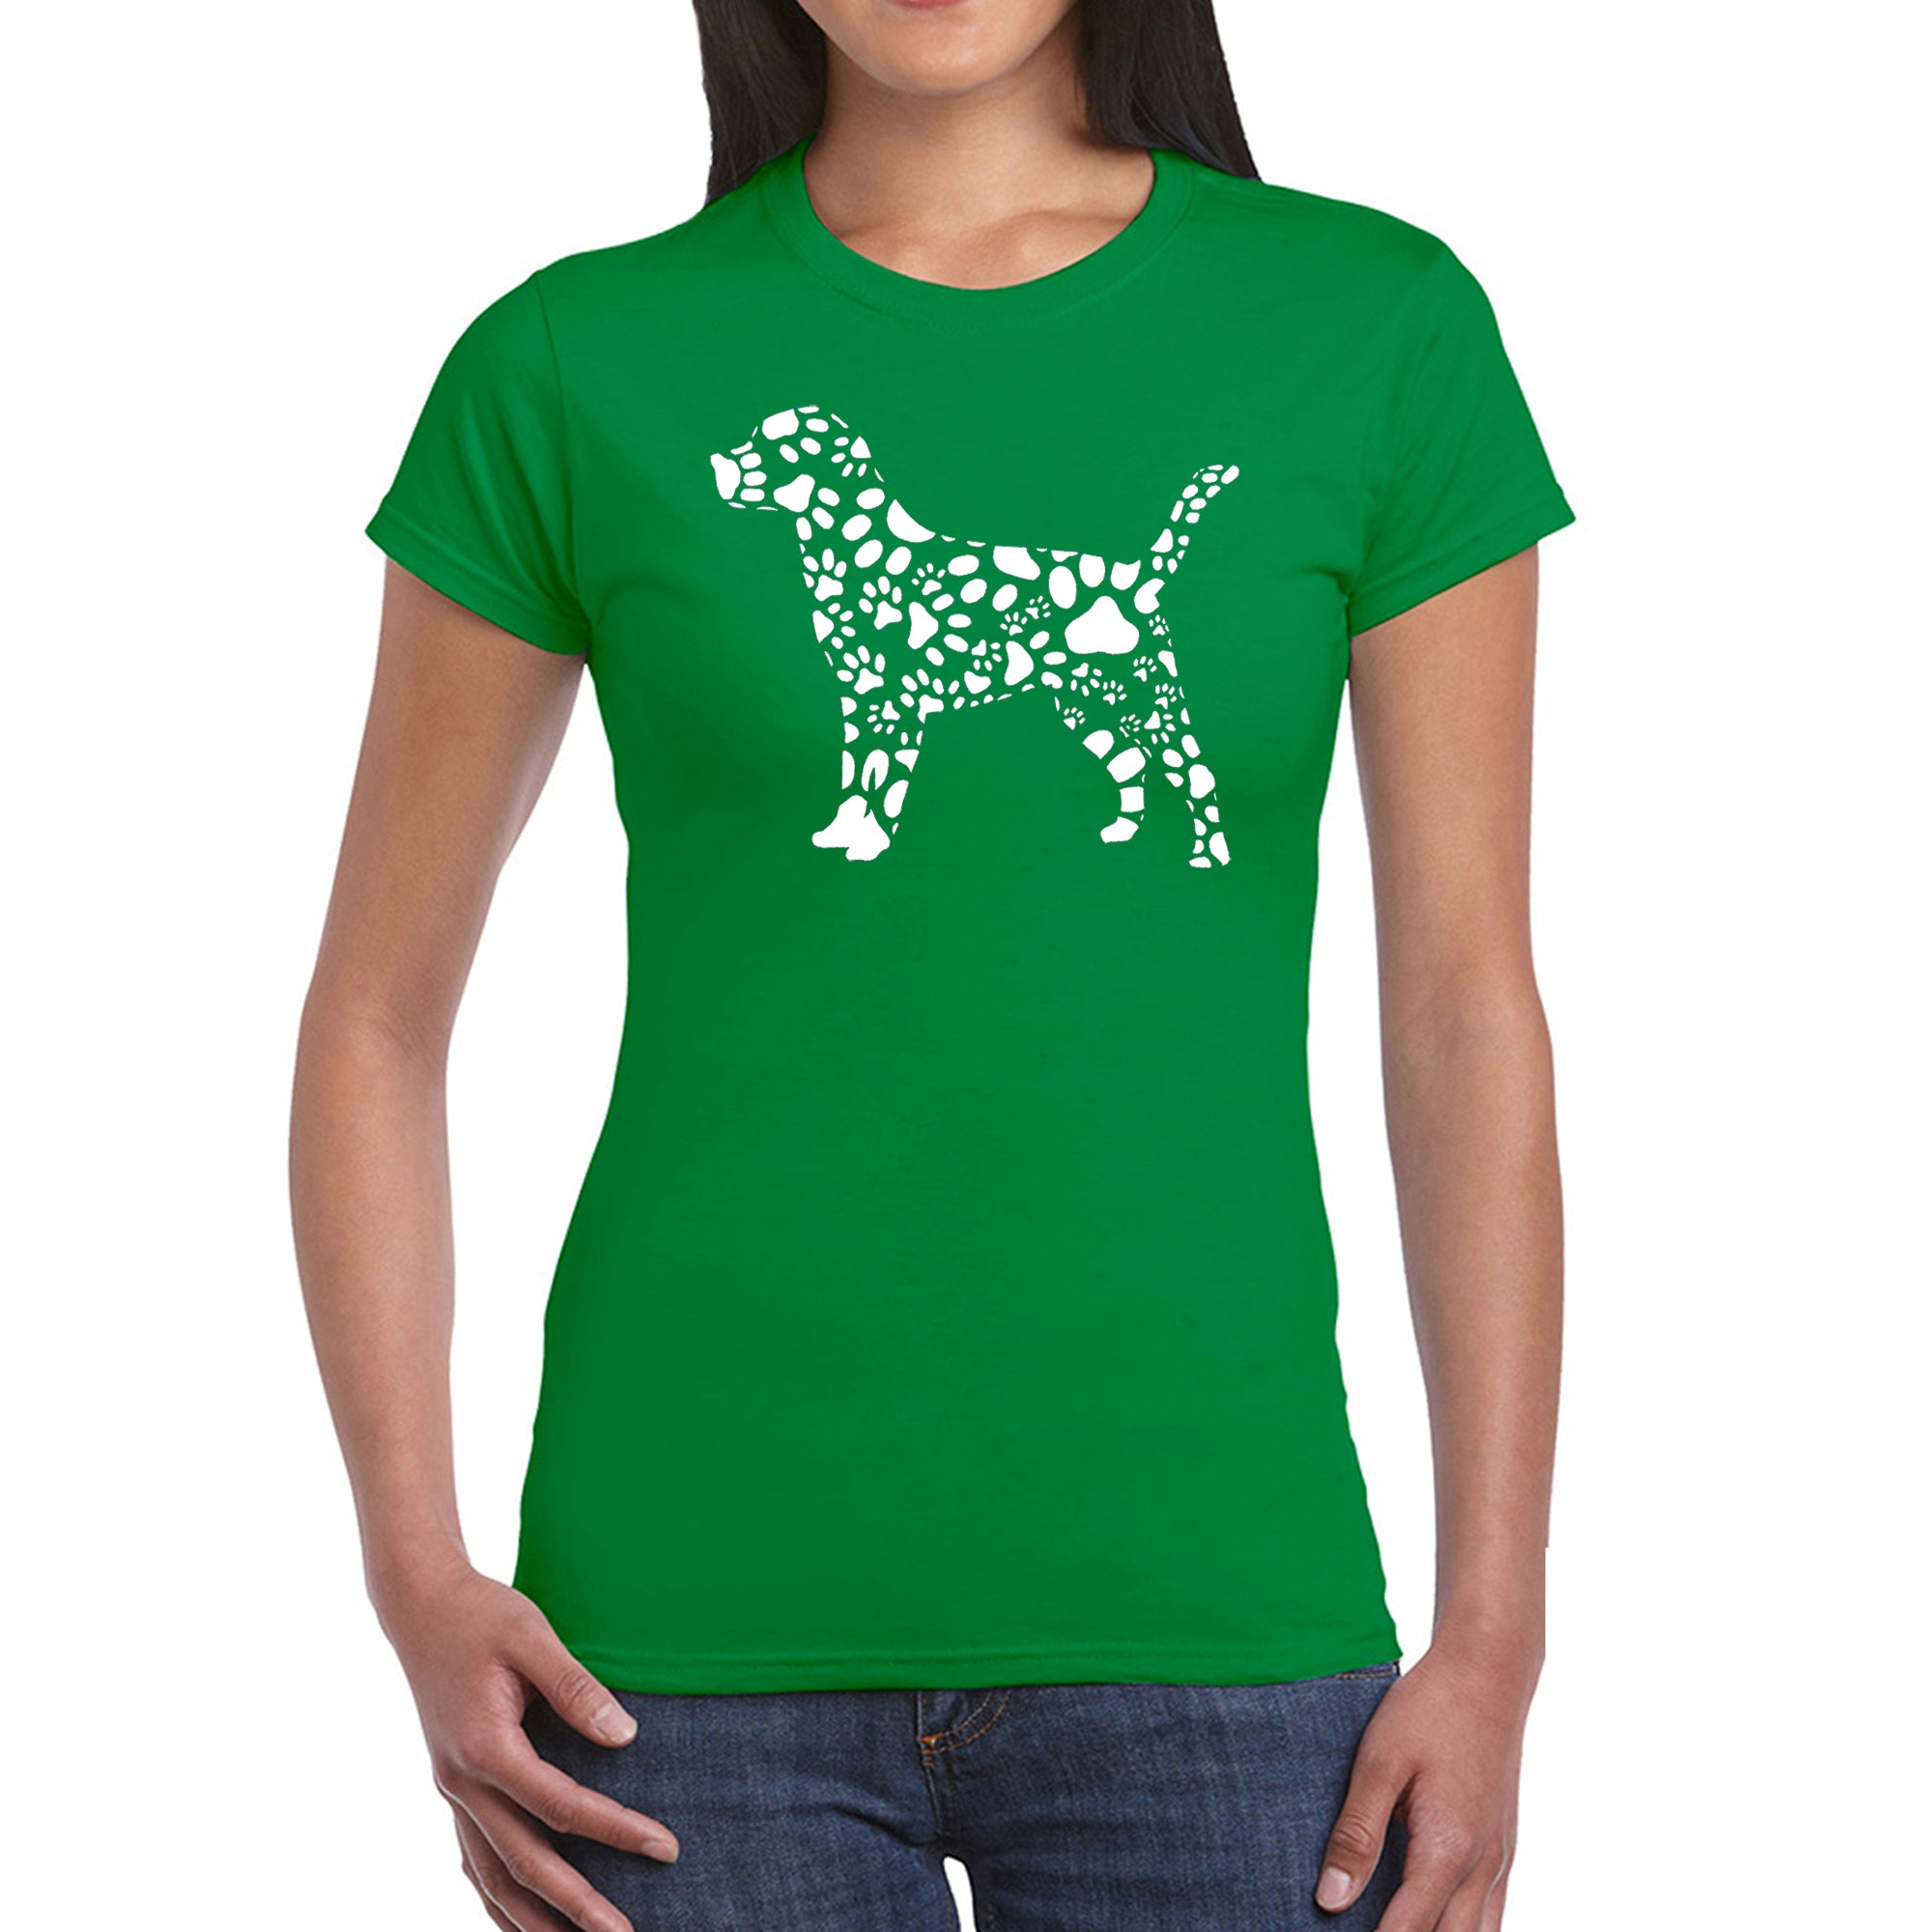 Dog Paw Prints - Women's Word Art T-Shirt - Kelly - XX-Large